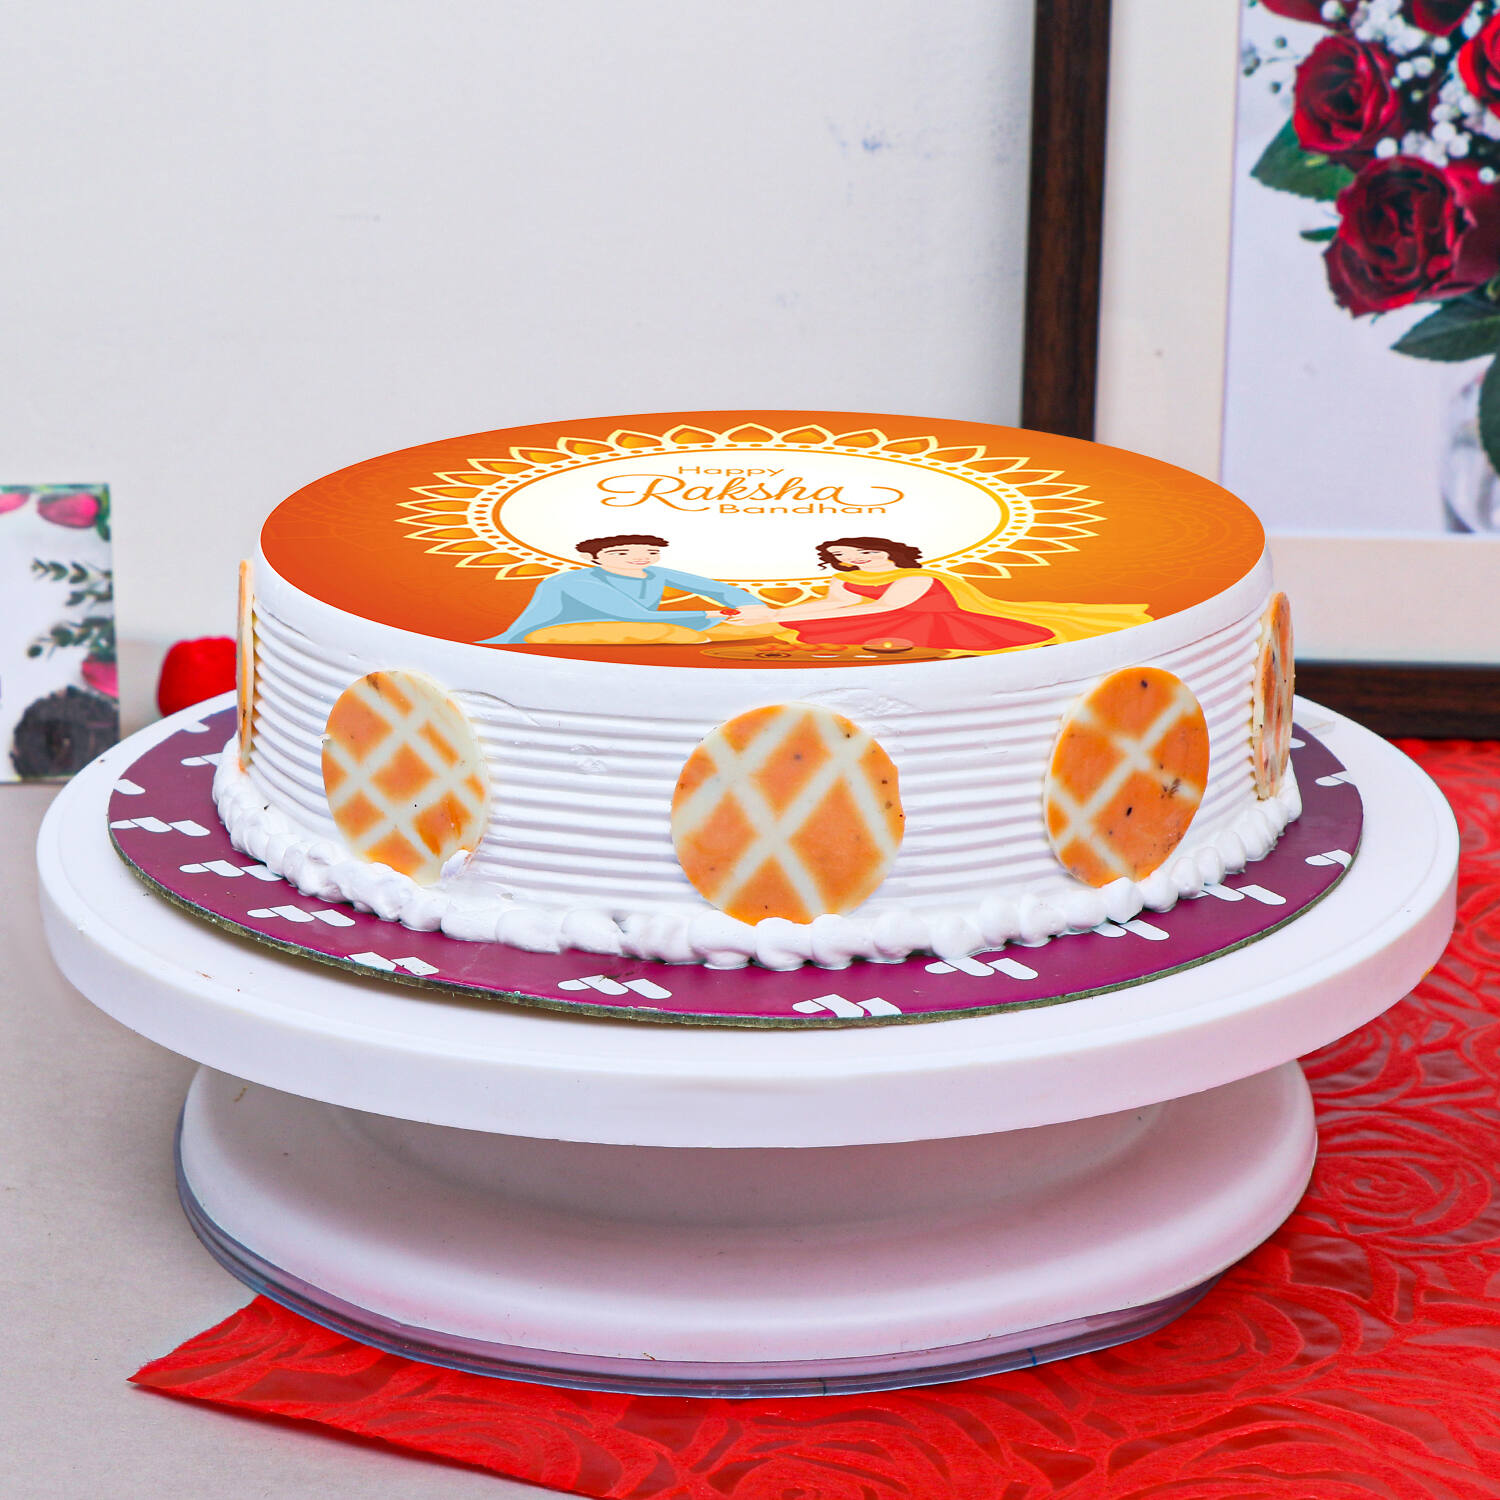 Hello Kitty Girls Birthday Cake Design, Decoration Ideas/Birthday cake  images, photos,pictures - YouTube